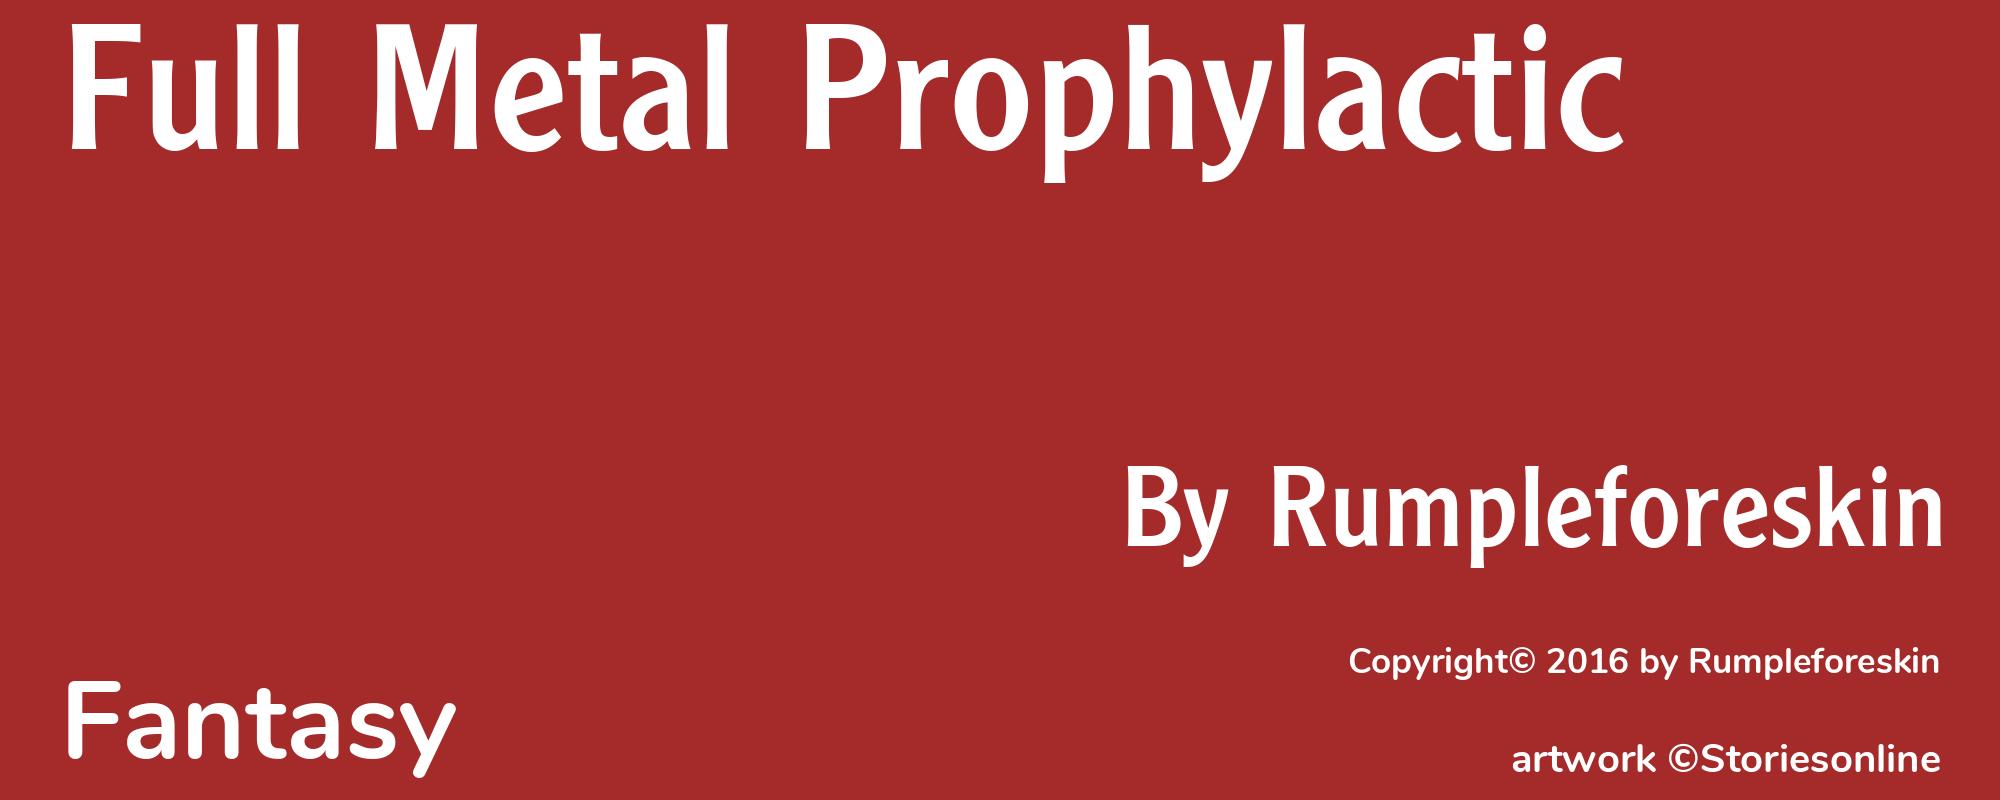 Full Metal Prophylactic - Cover